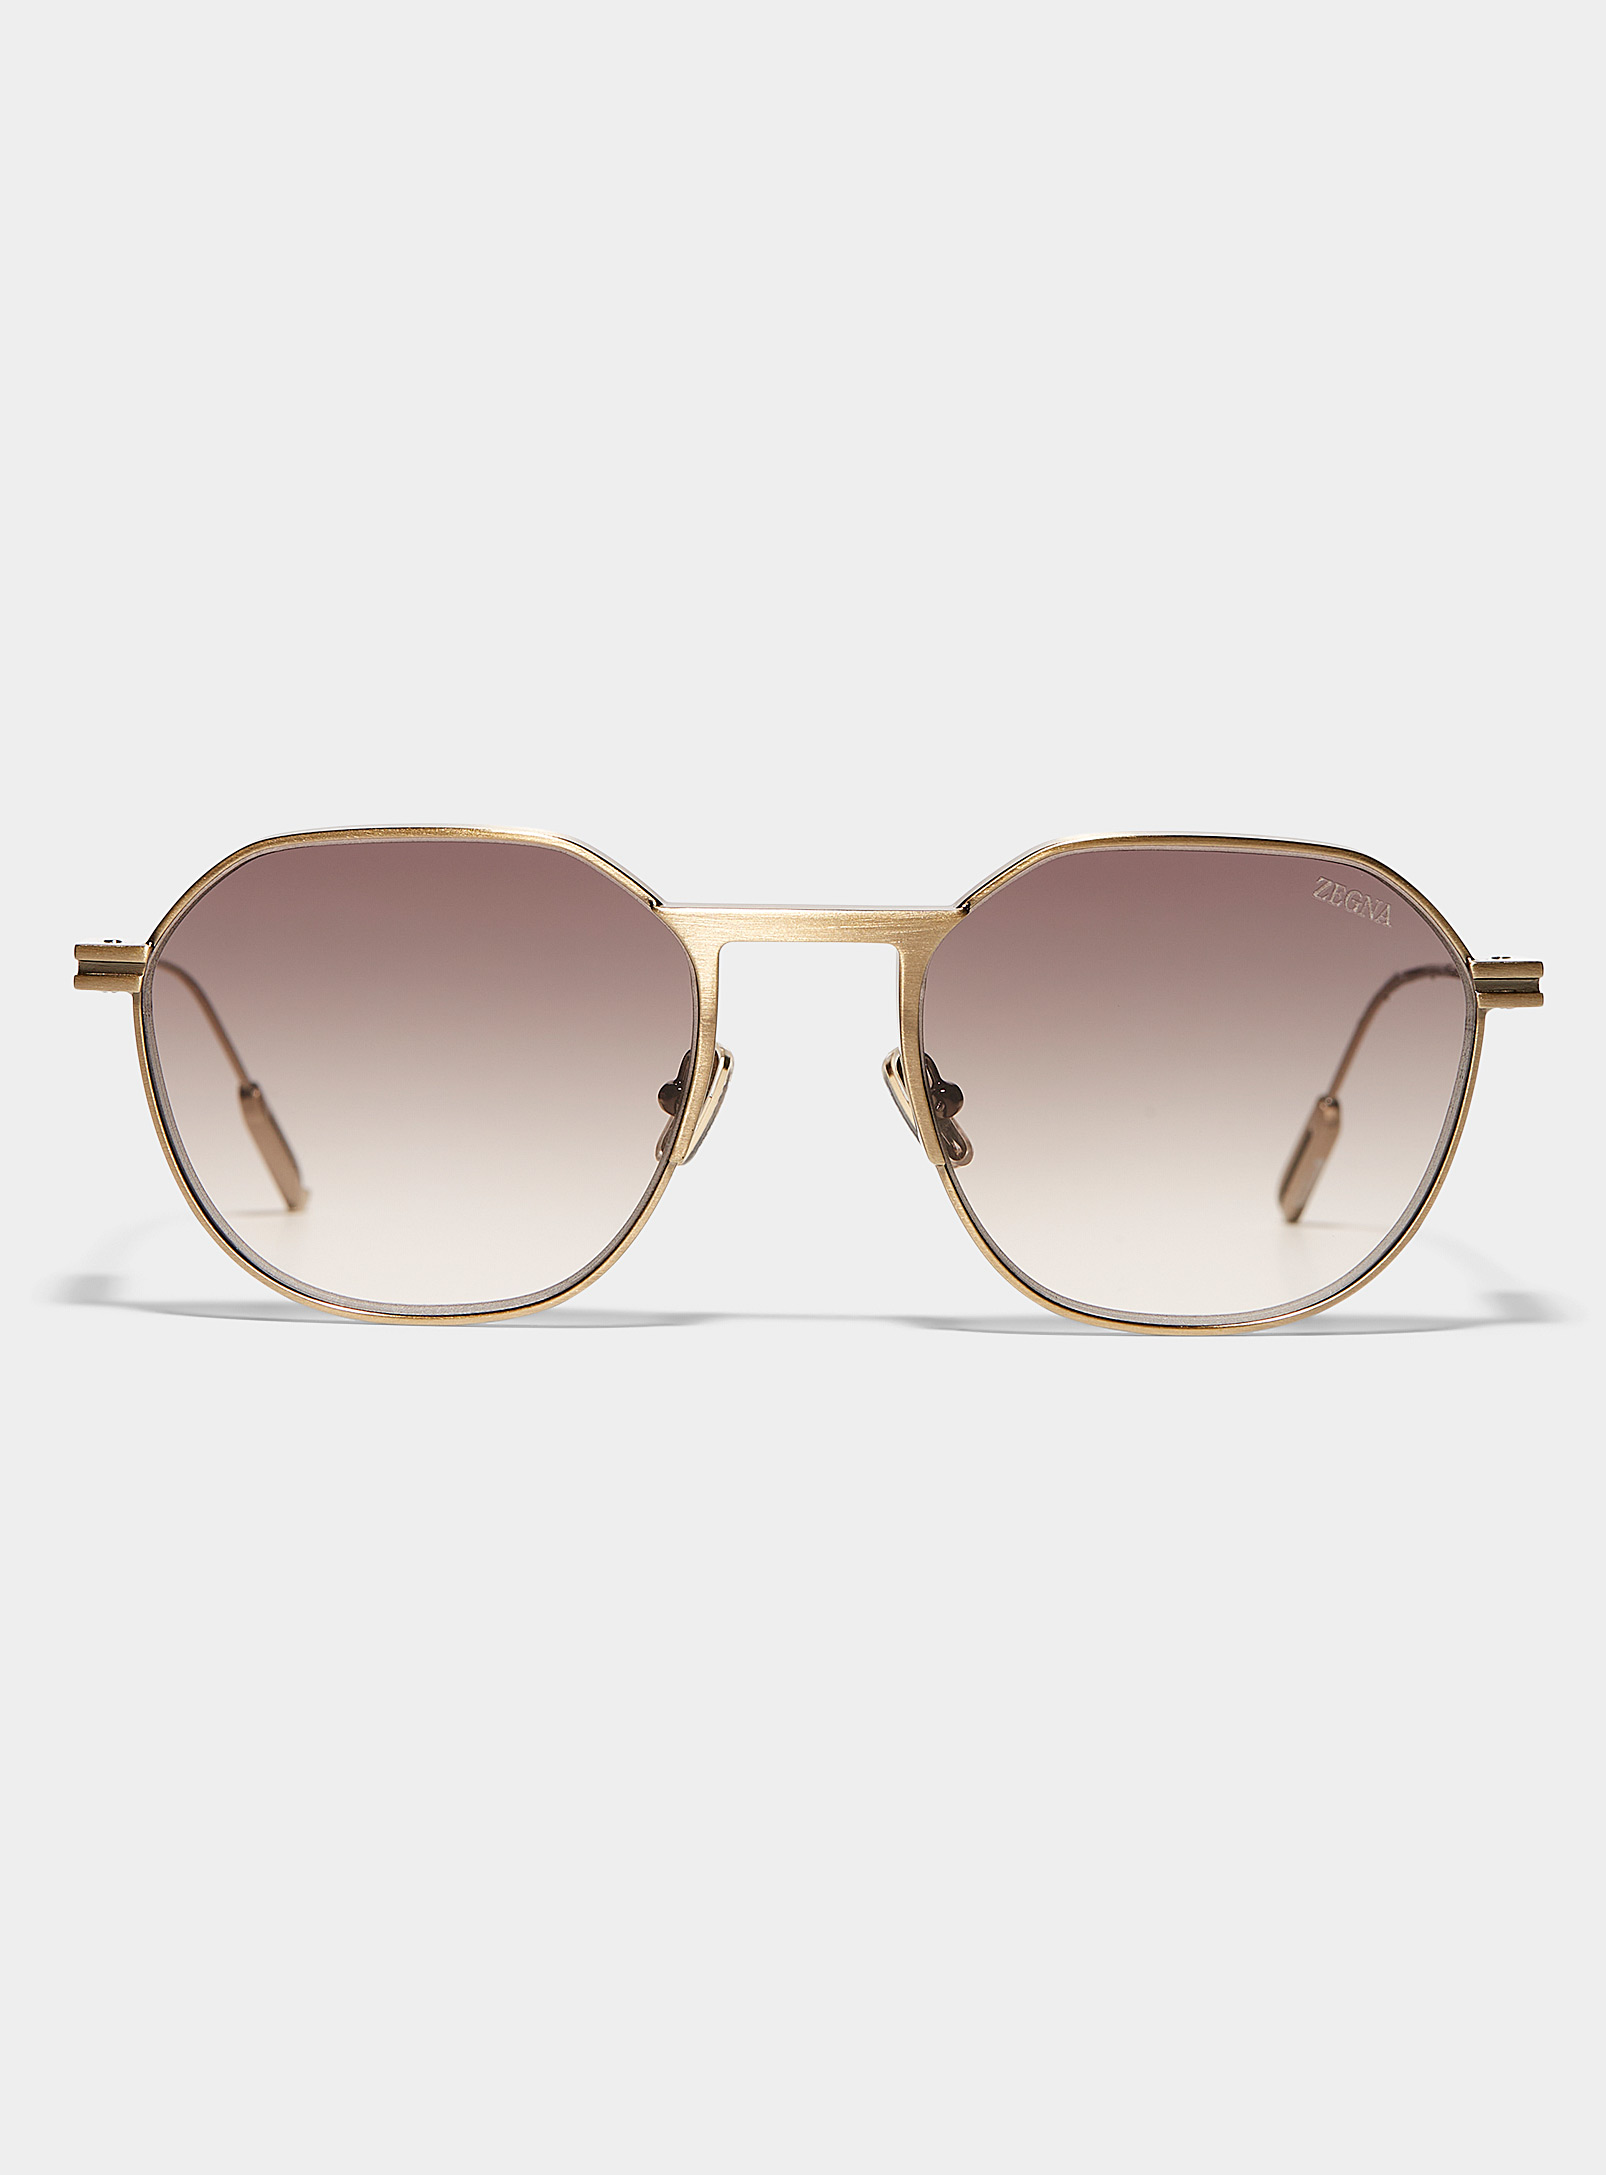 Zegna - Bronze square sunglasses